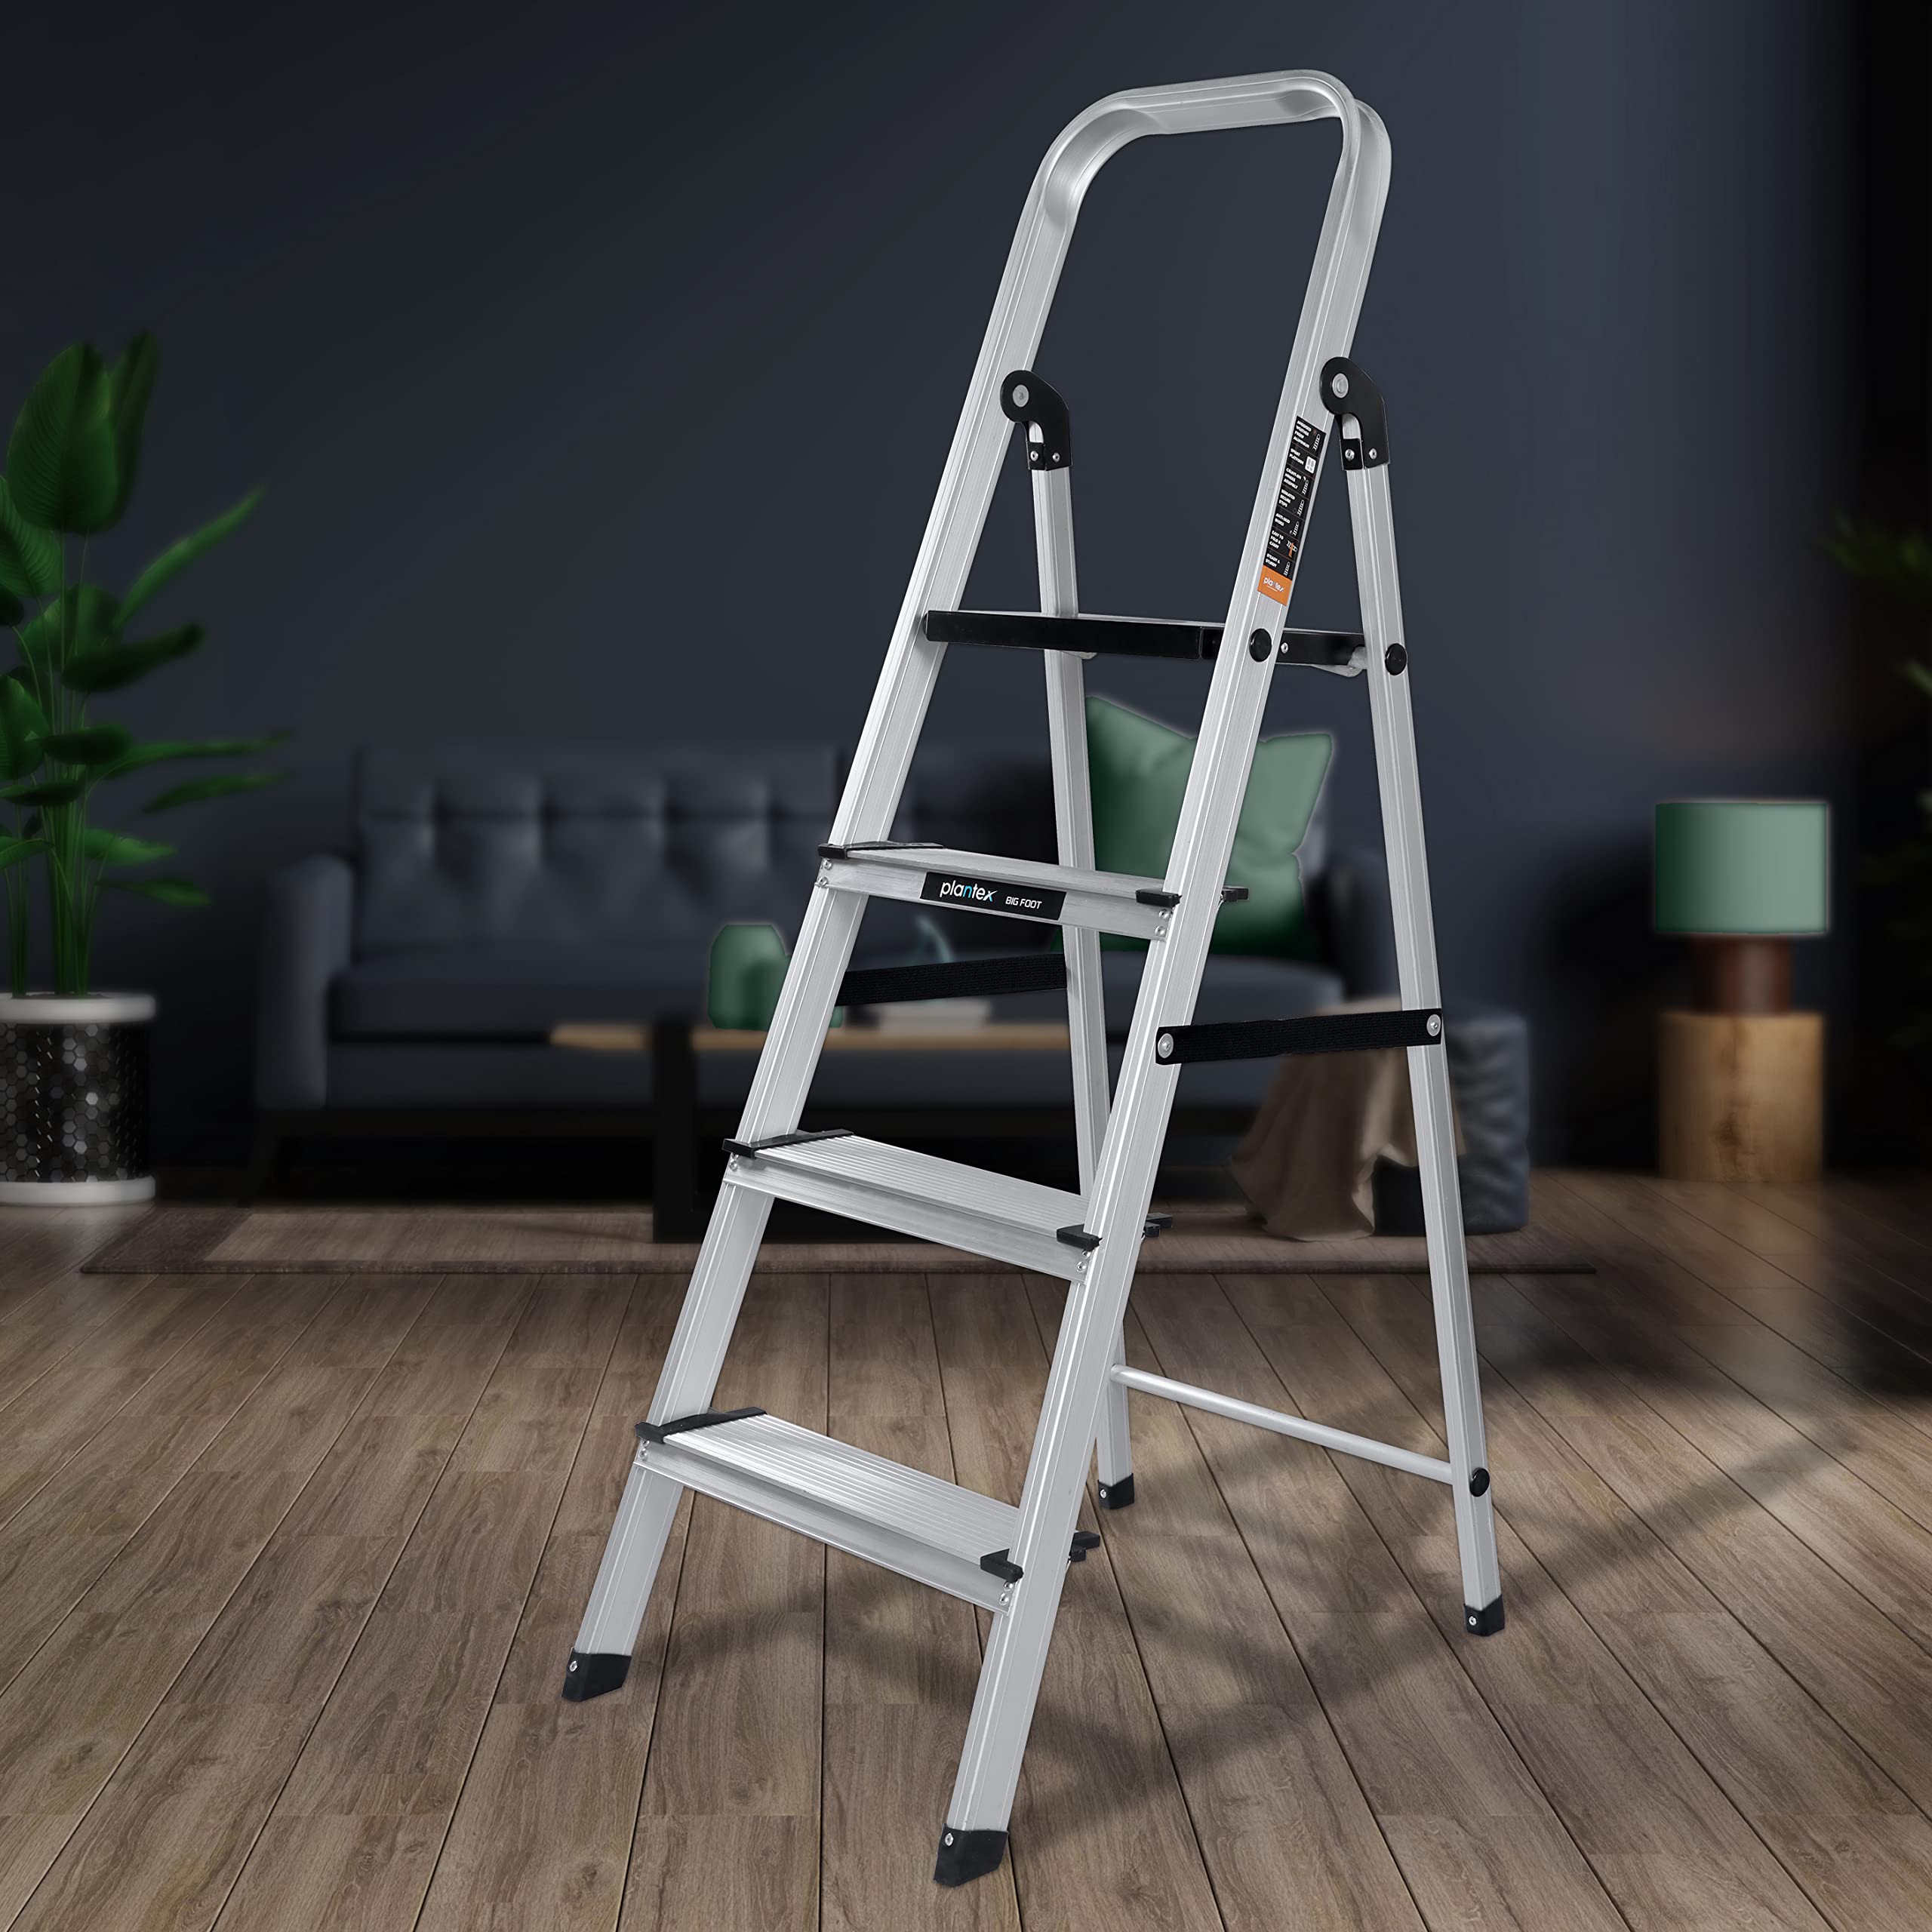 Plantex Big Foot - Widest Steps - Fully Aluminium Folding 4 Step Ladder for Home - 4 Wide Step Ladder (Black-Silver)